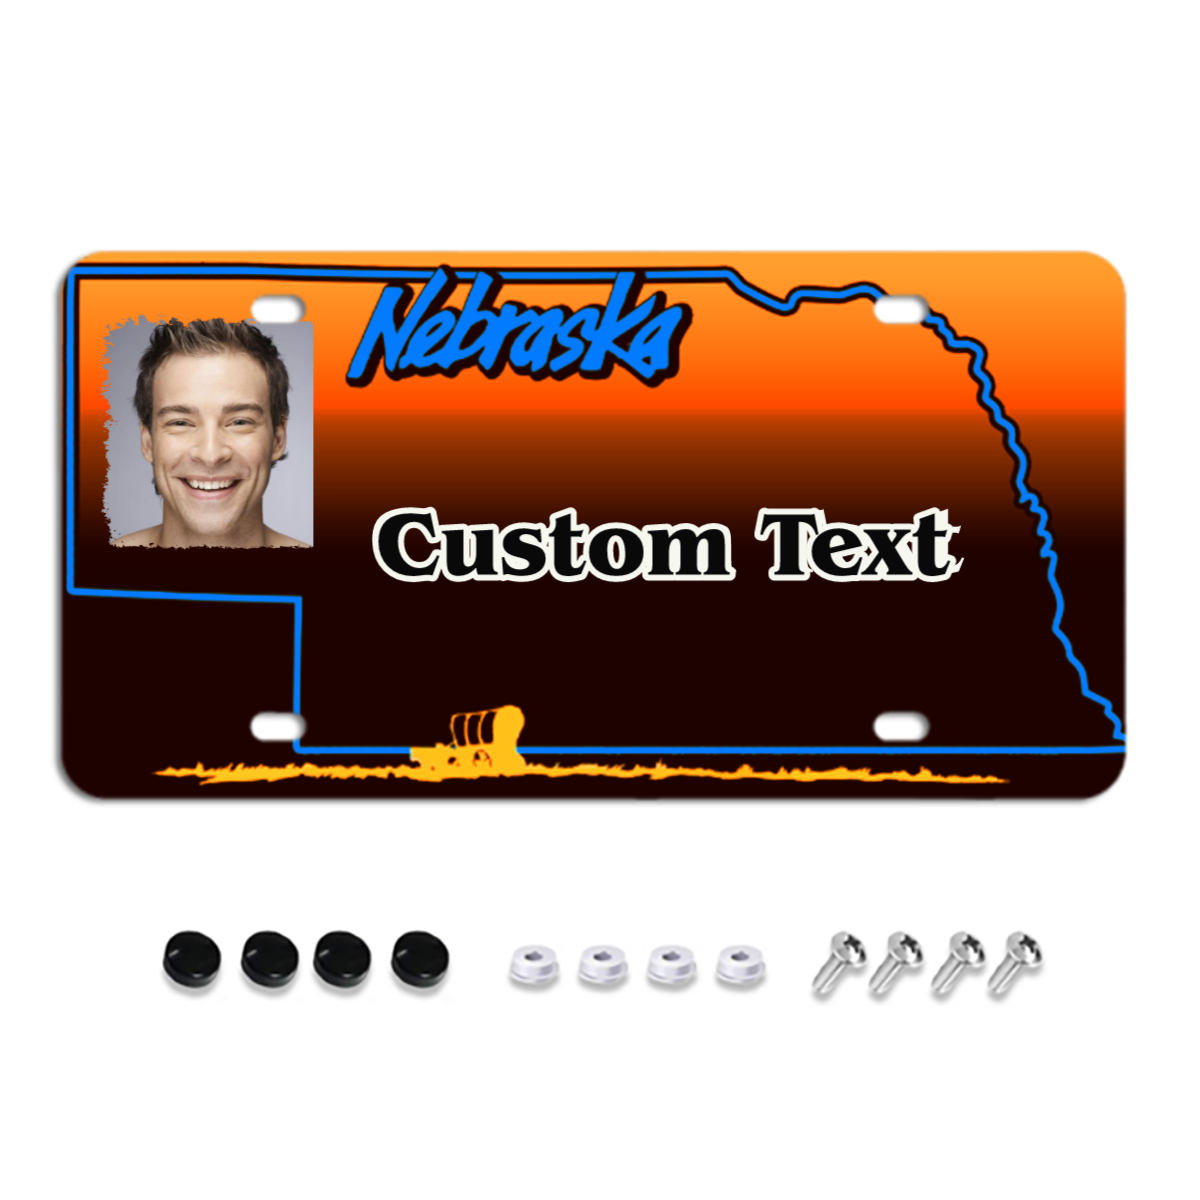 Nebraska Custom License Plates, Personalized Photo & Text & Background